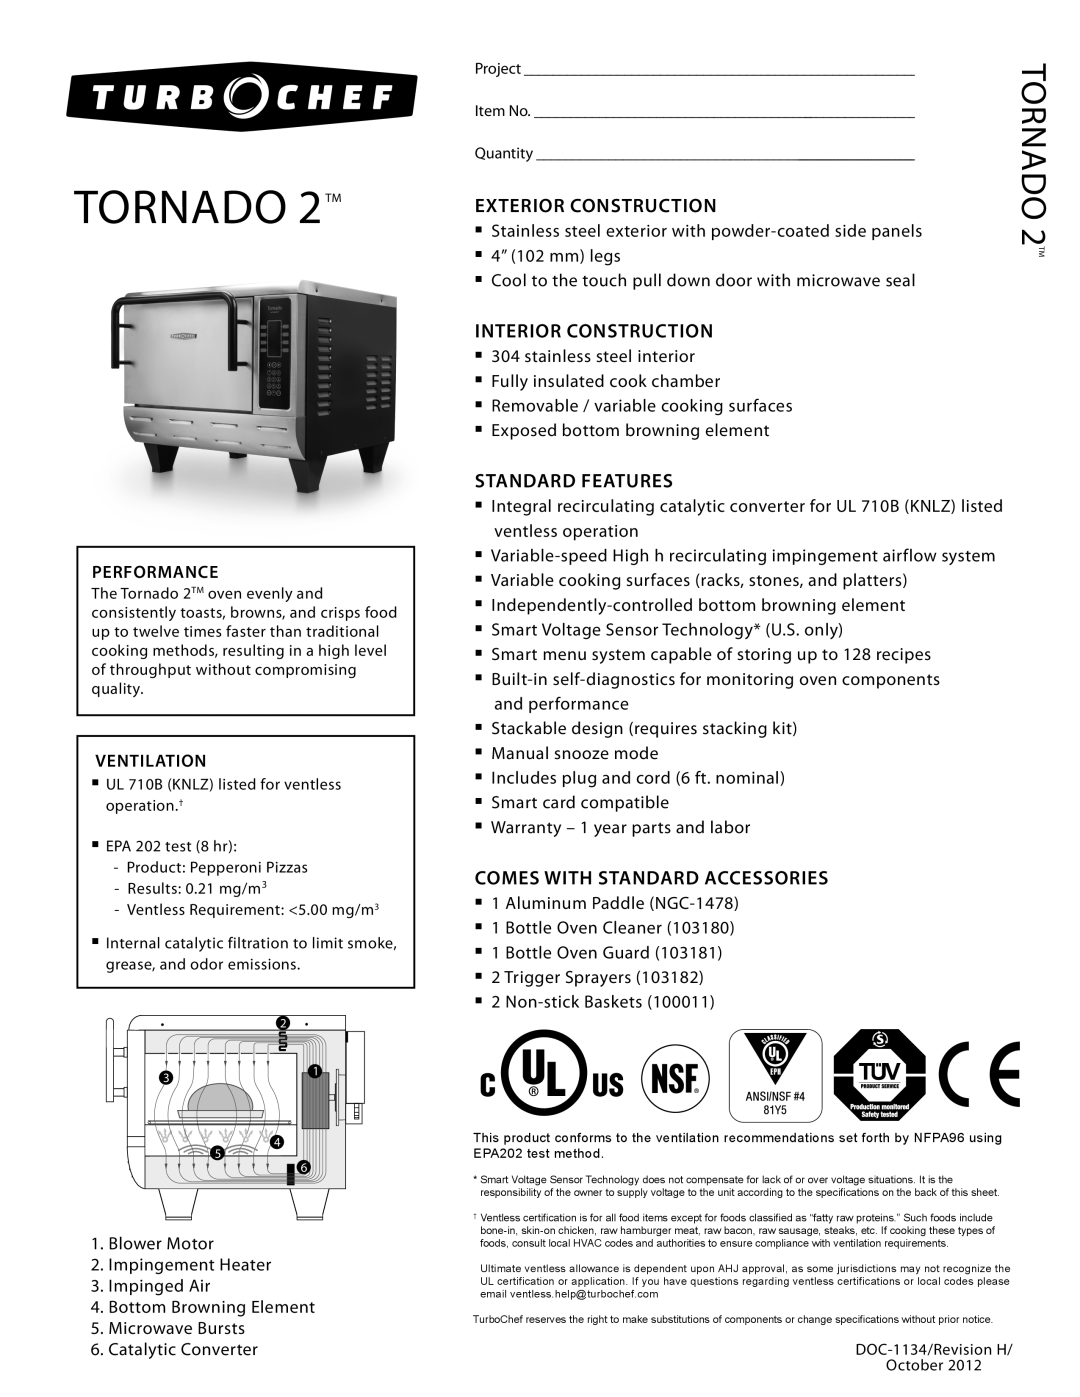 Turbo Chef Technologies Tornado TORNADO 2TM, Exterior Construction, Interior Construction, Standard Features, Performance 